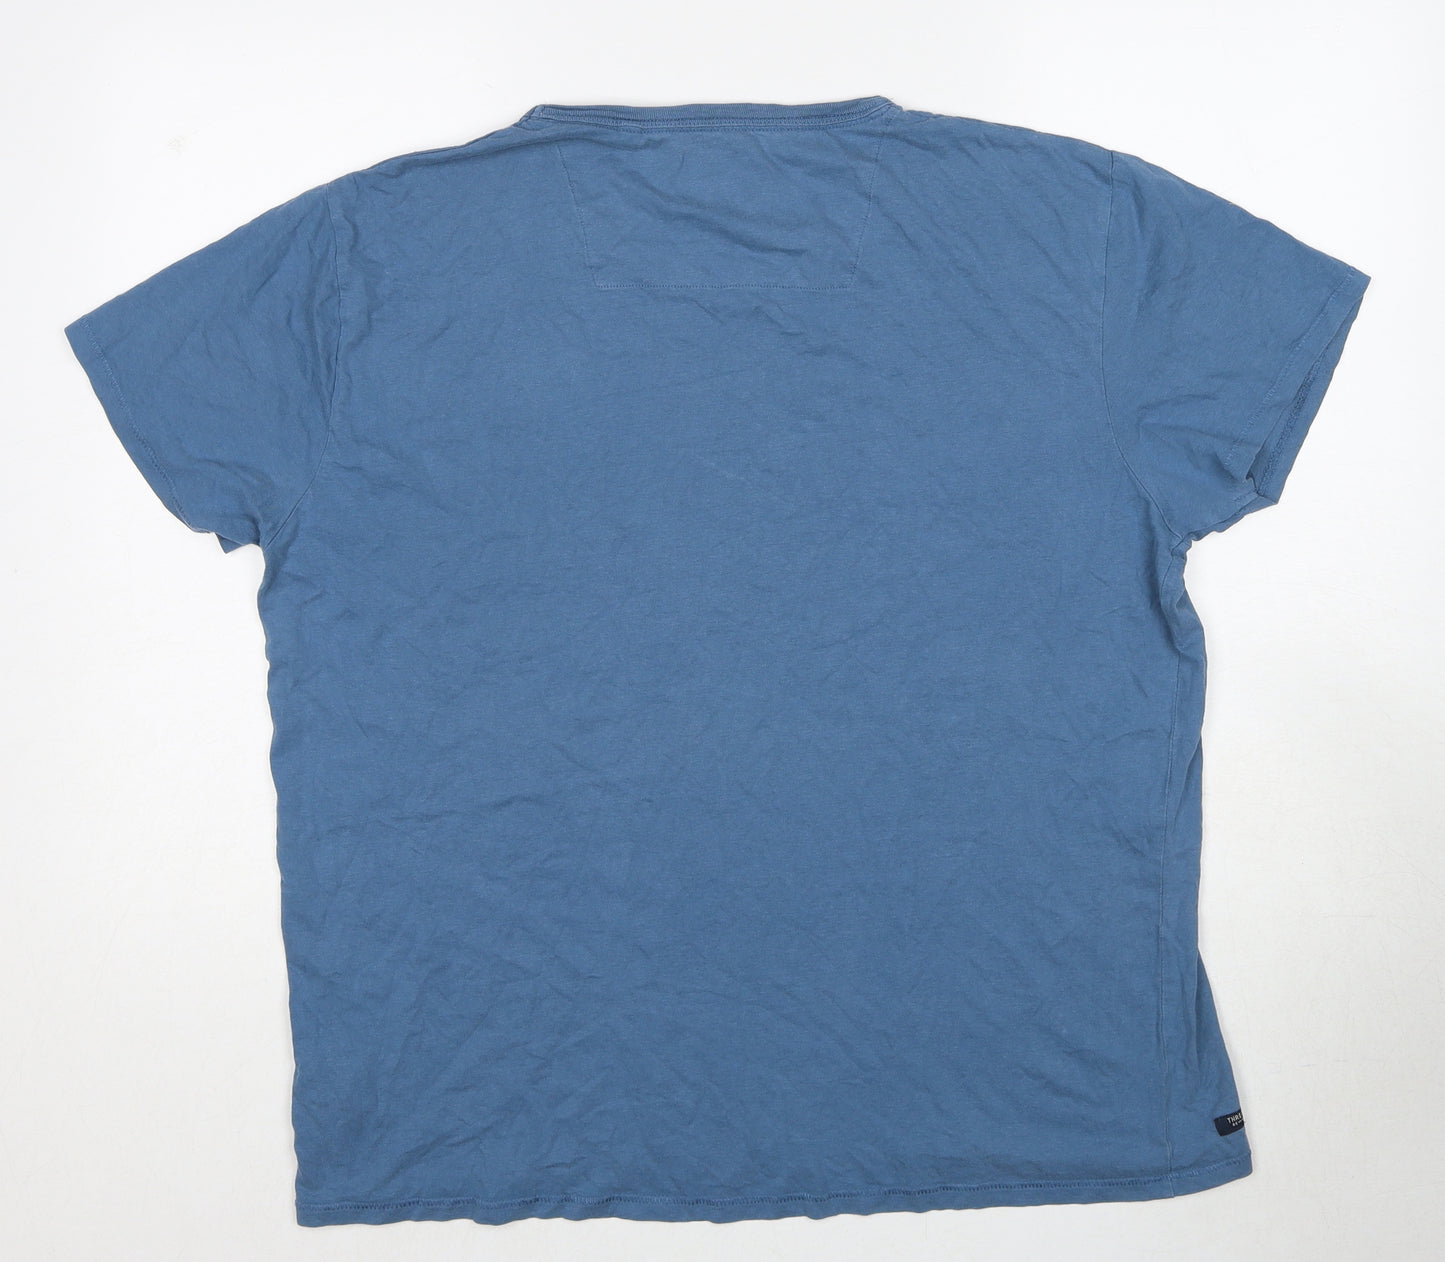 Threadbare Mens Blue Cotton T-Shirt Size 2XL Round Neck